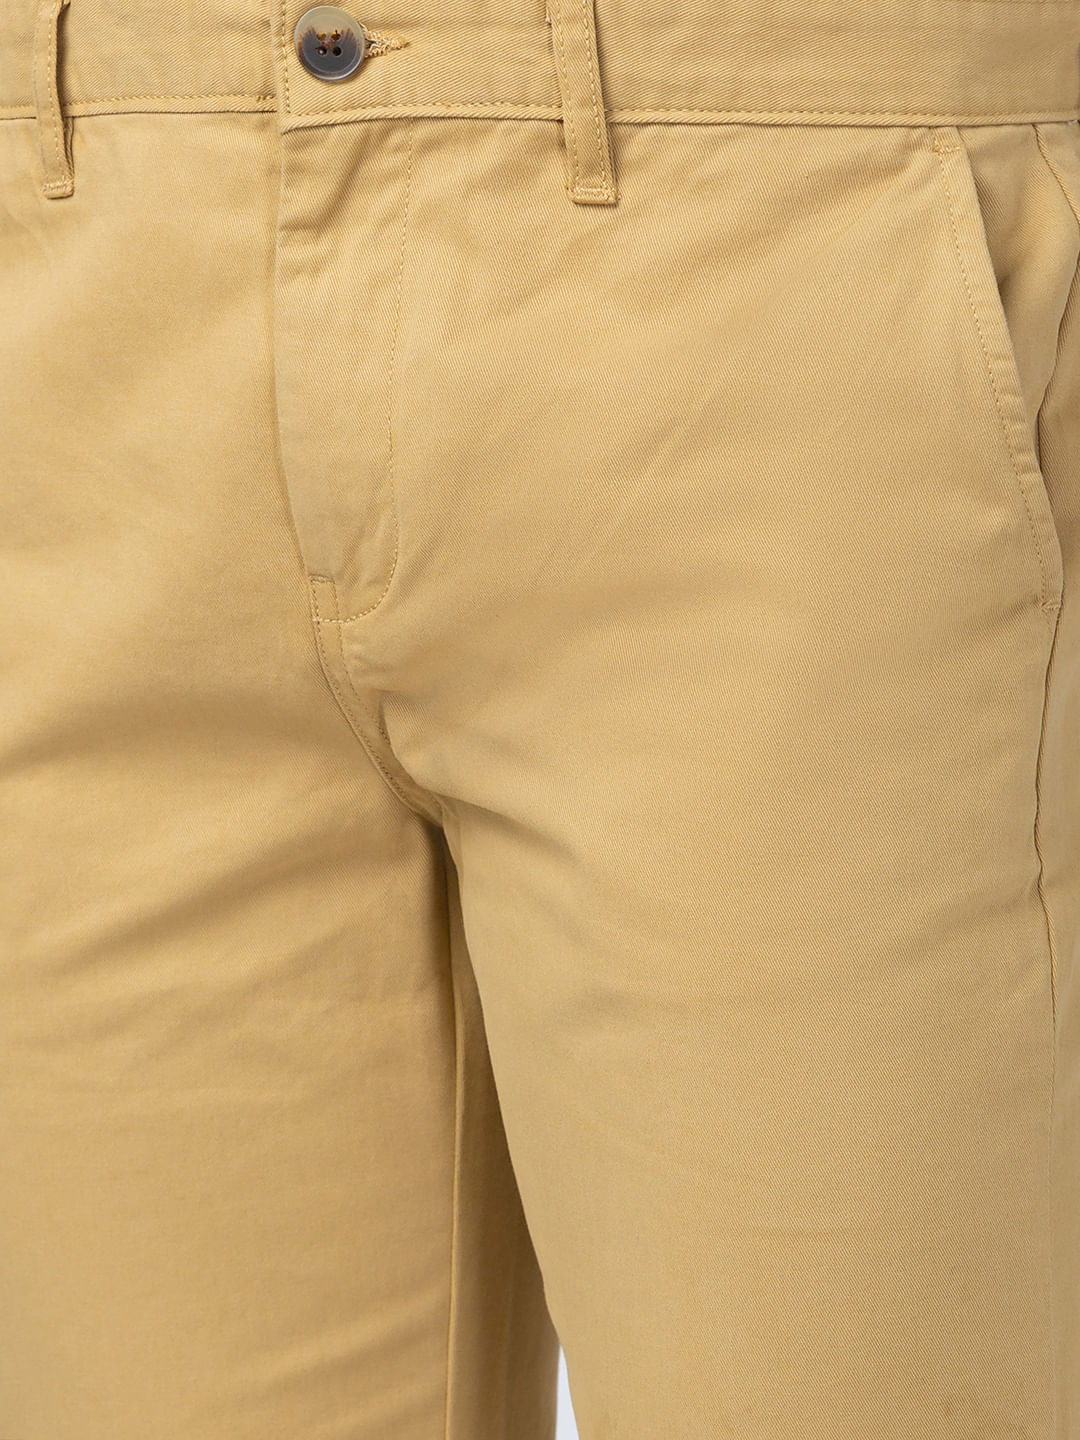 Old Navy The Diva Bootcut Pants Women's Size 6 Regular Tan Khaki Color |  eBay